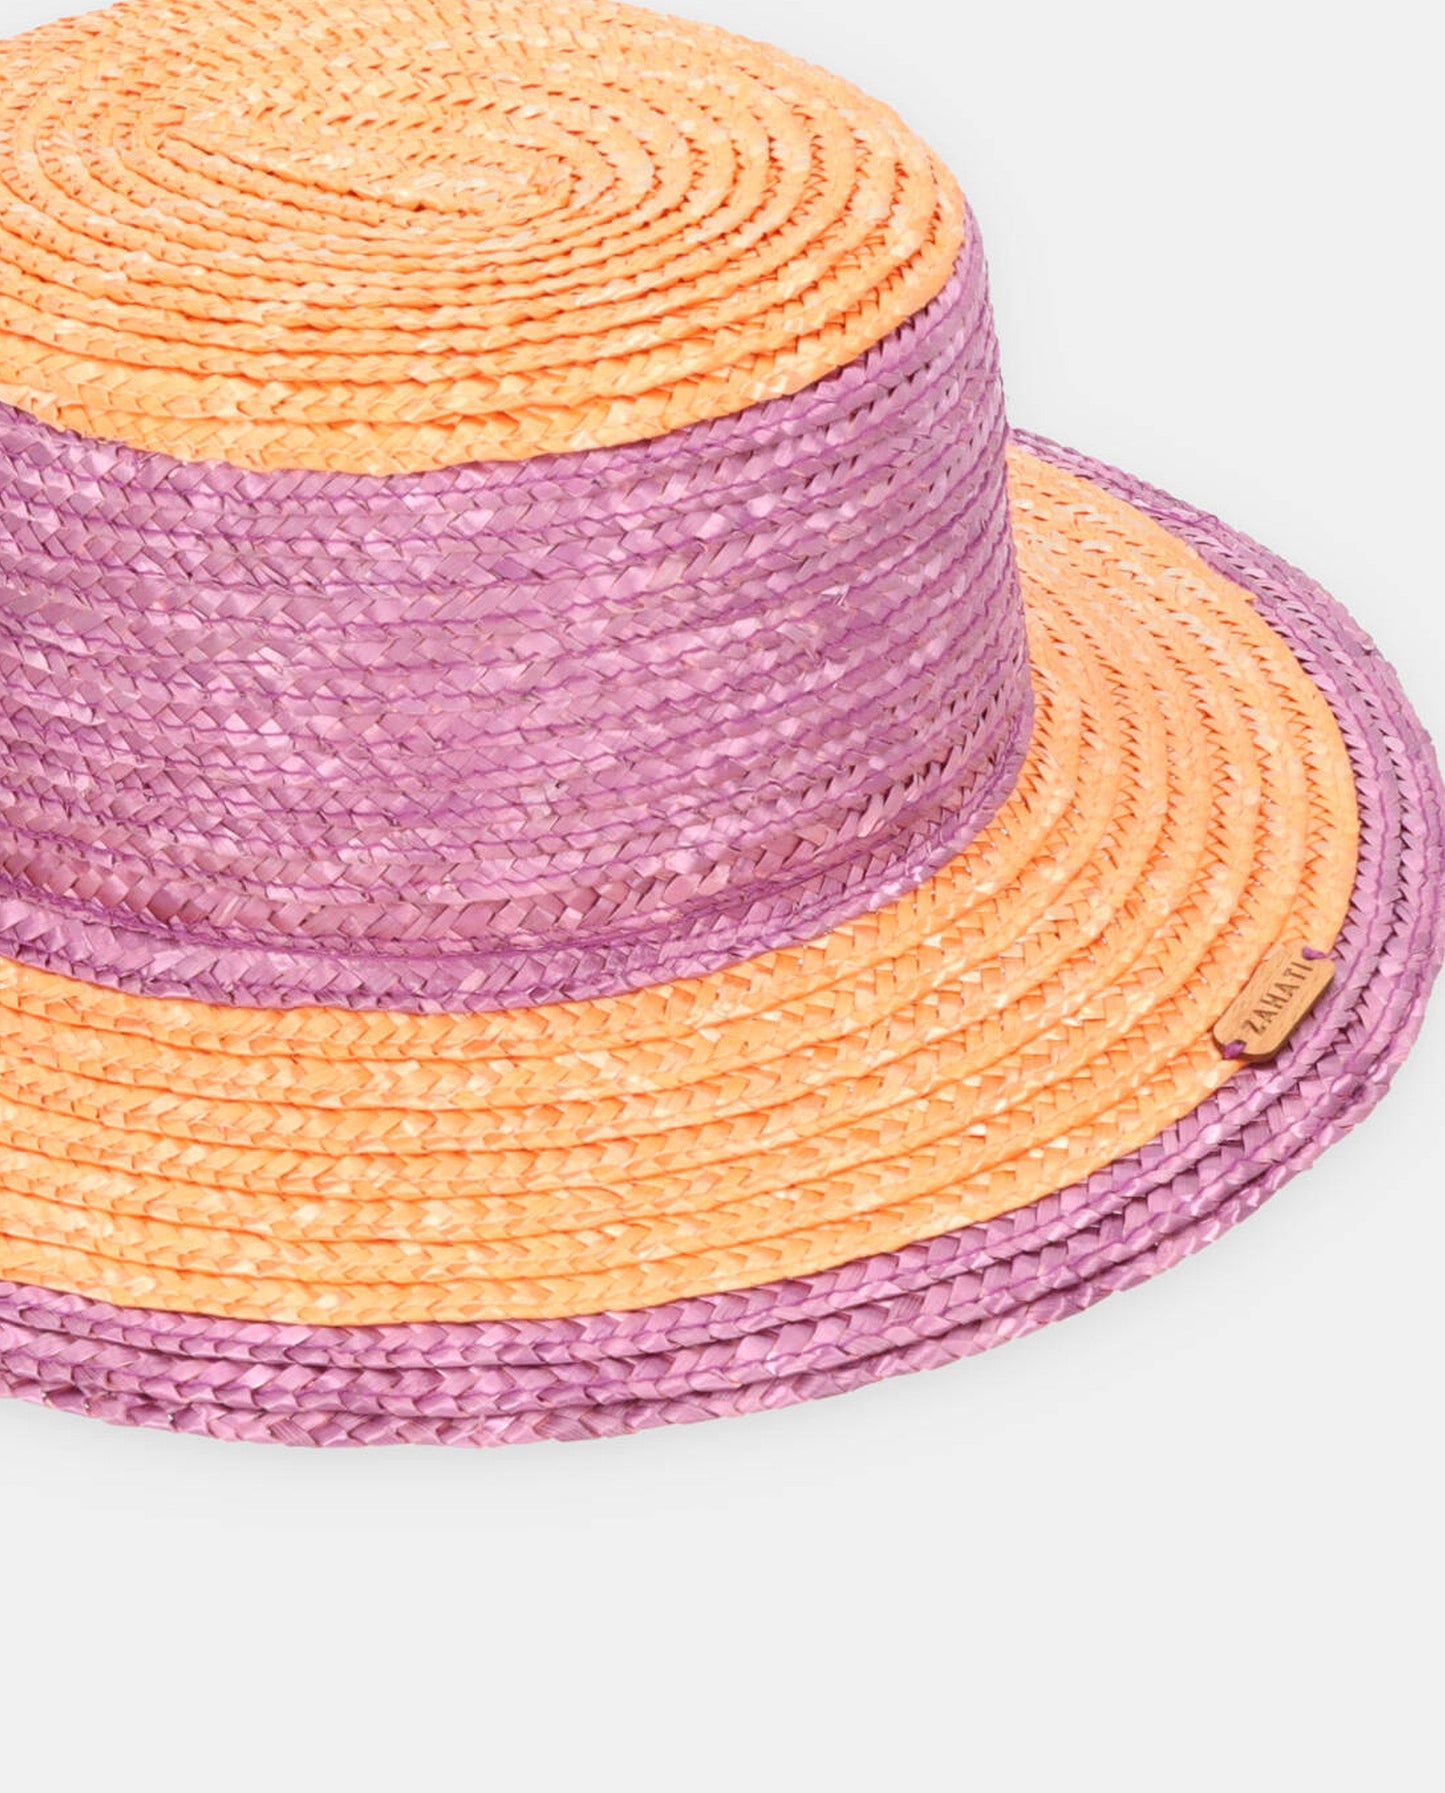 Two-tone orange-purple Cuchi hat with S brim